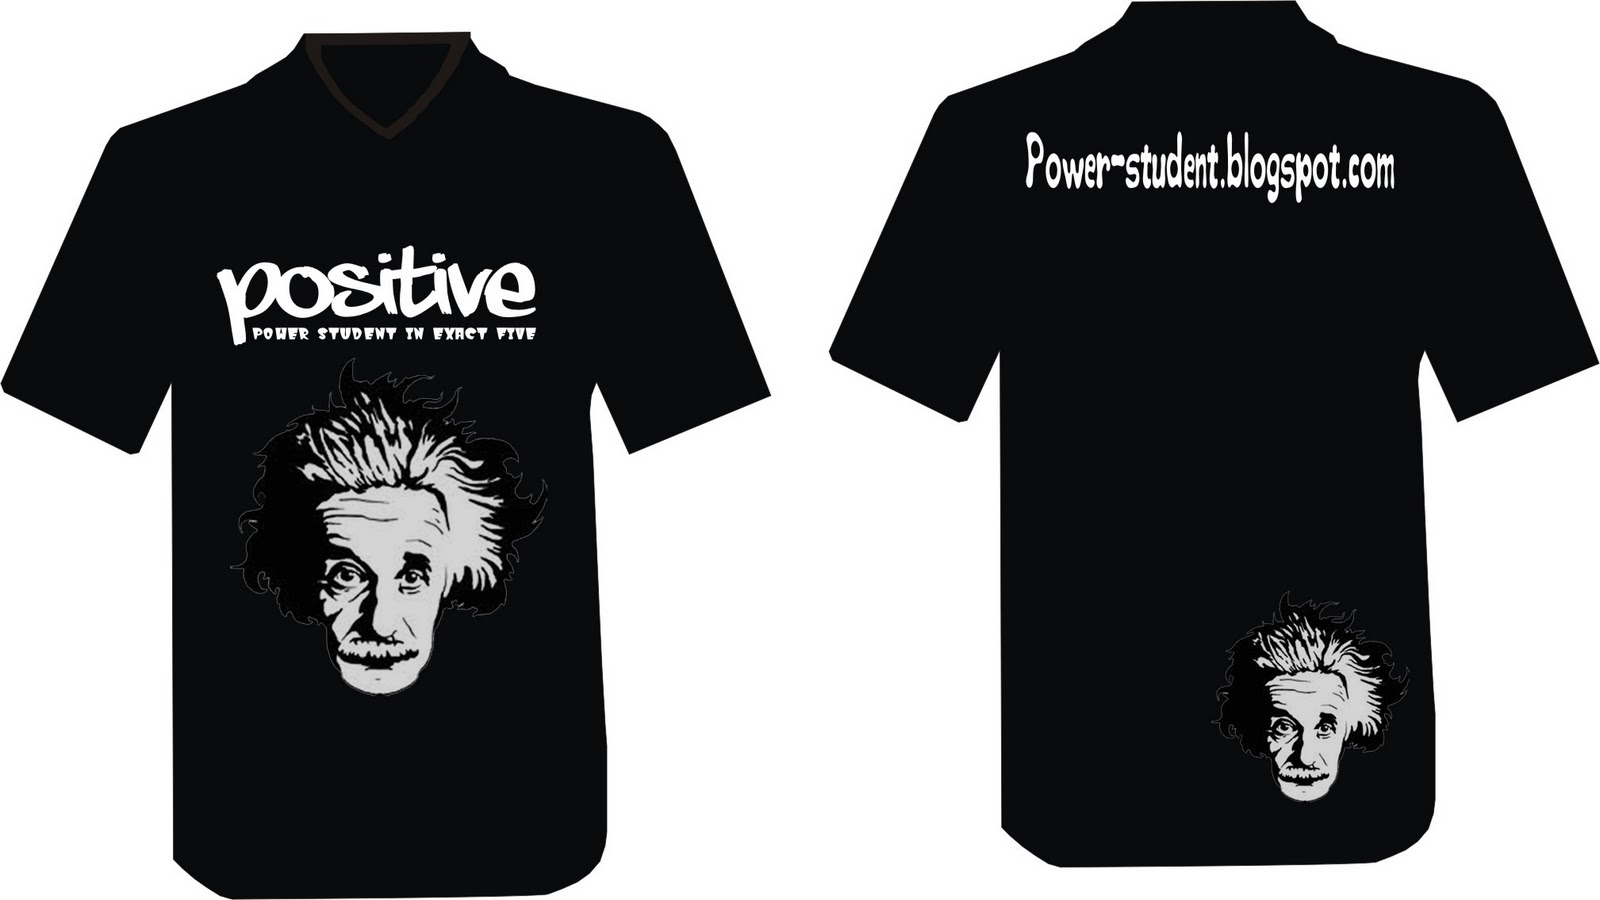 Power Student In Exact Five Desain baju kelas  kami